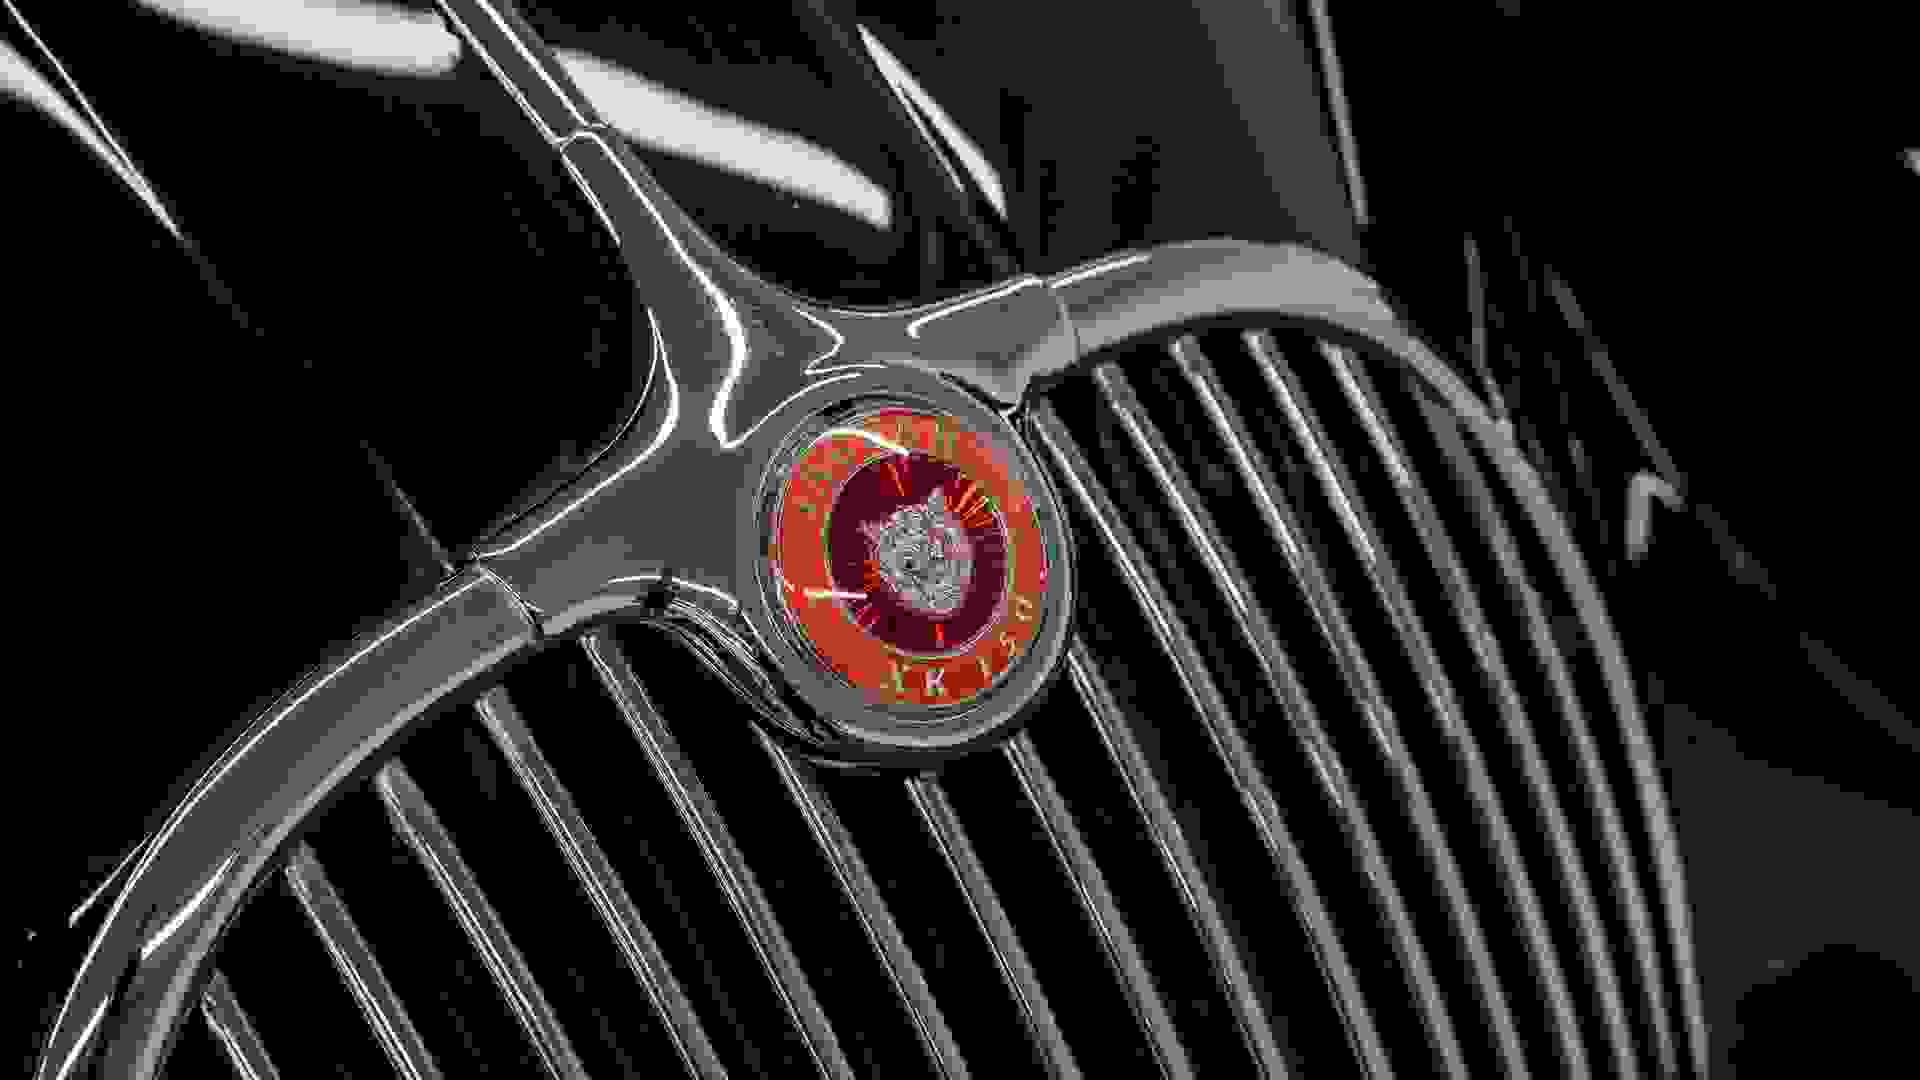 Jaguar XK150 Photo 814ca6e6-fbbf-4f31-9dca-083fe438bf6b.jpg